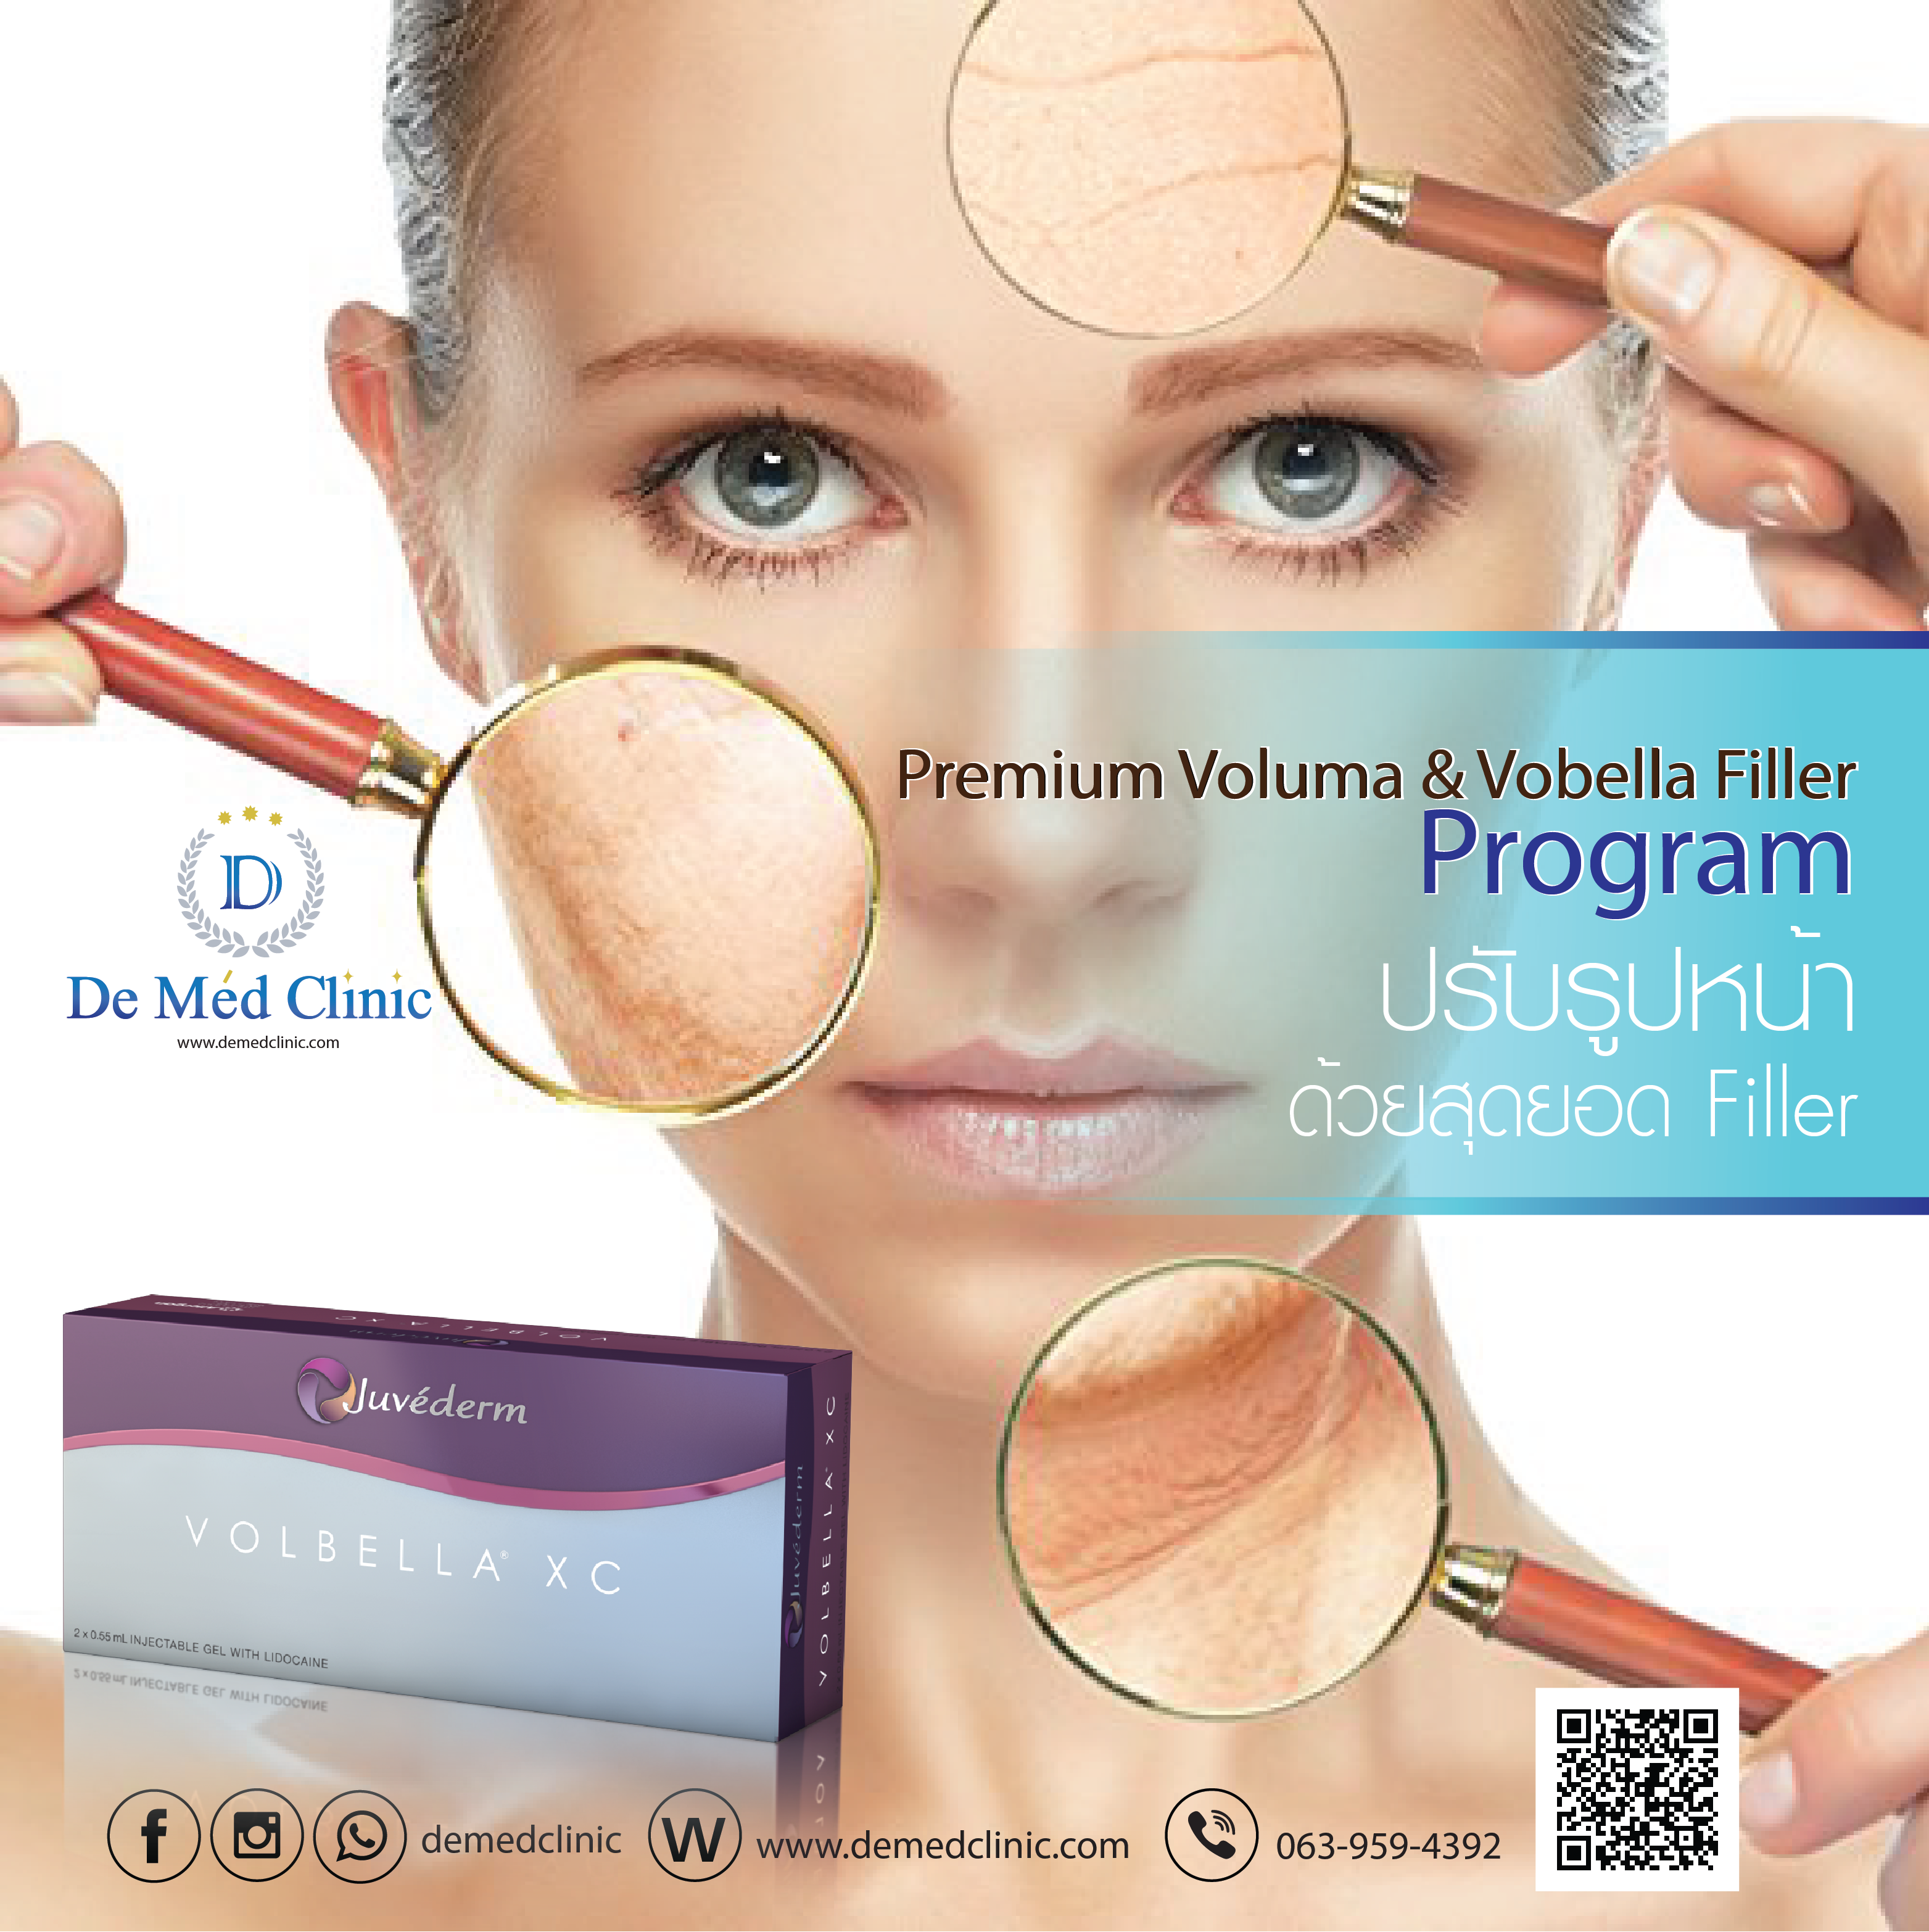 Premium Voluma & Vobella Filler Program